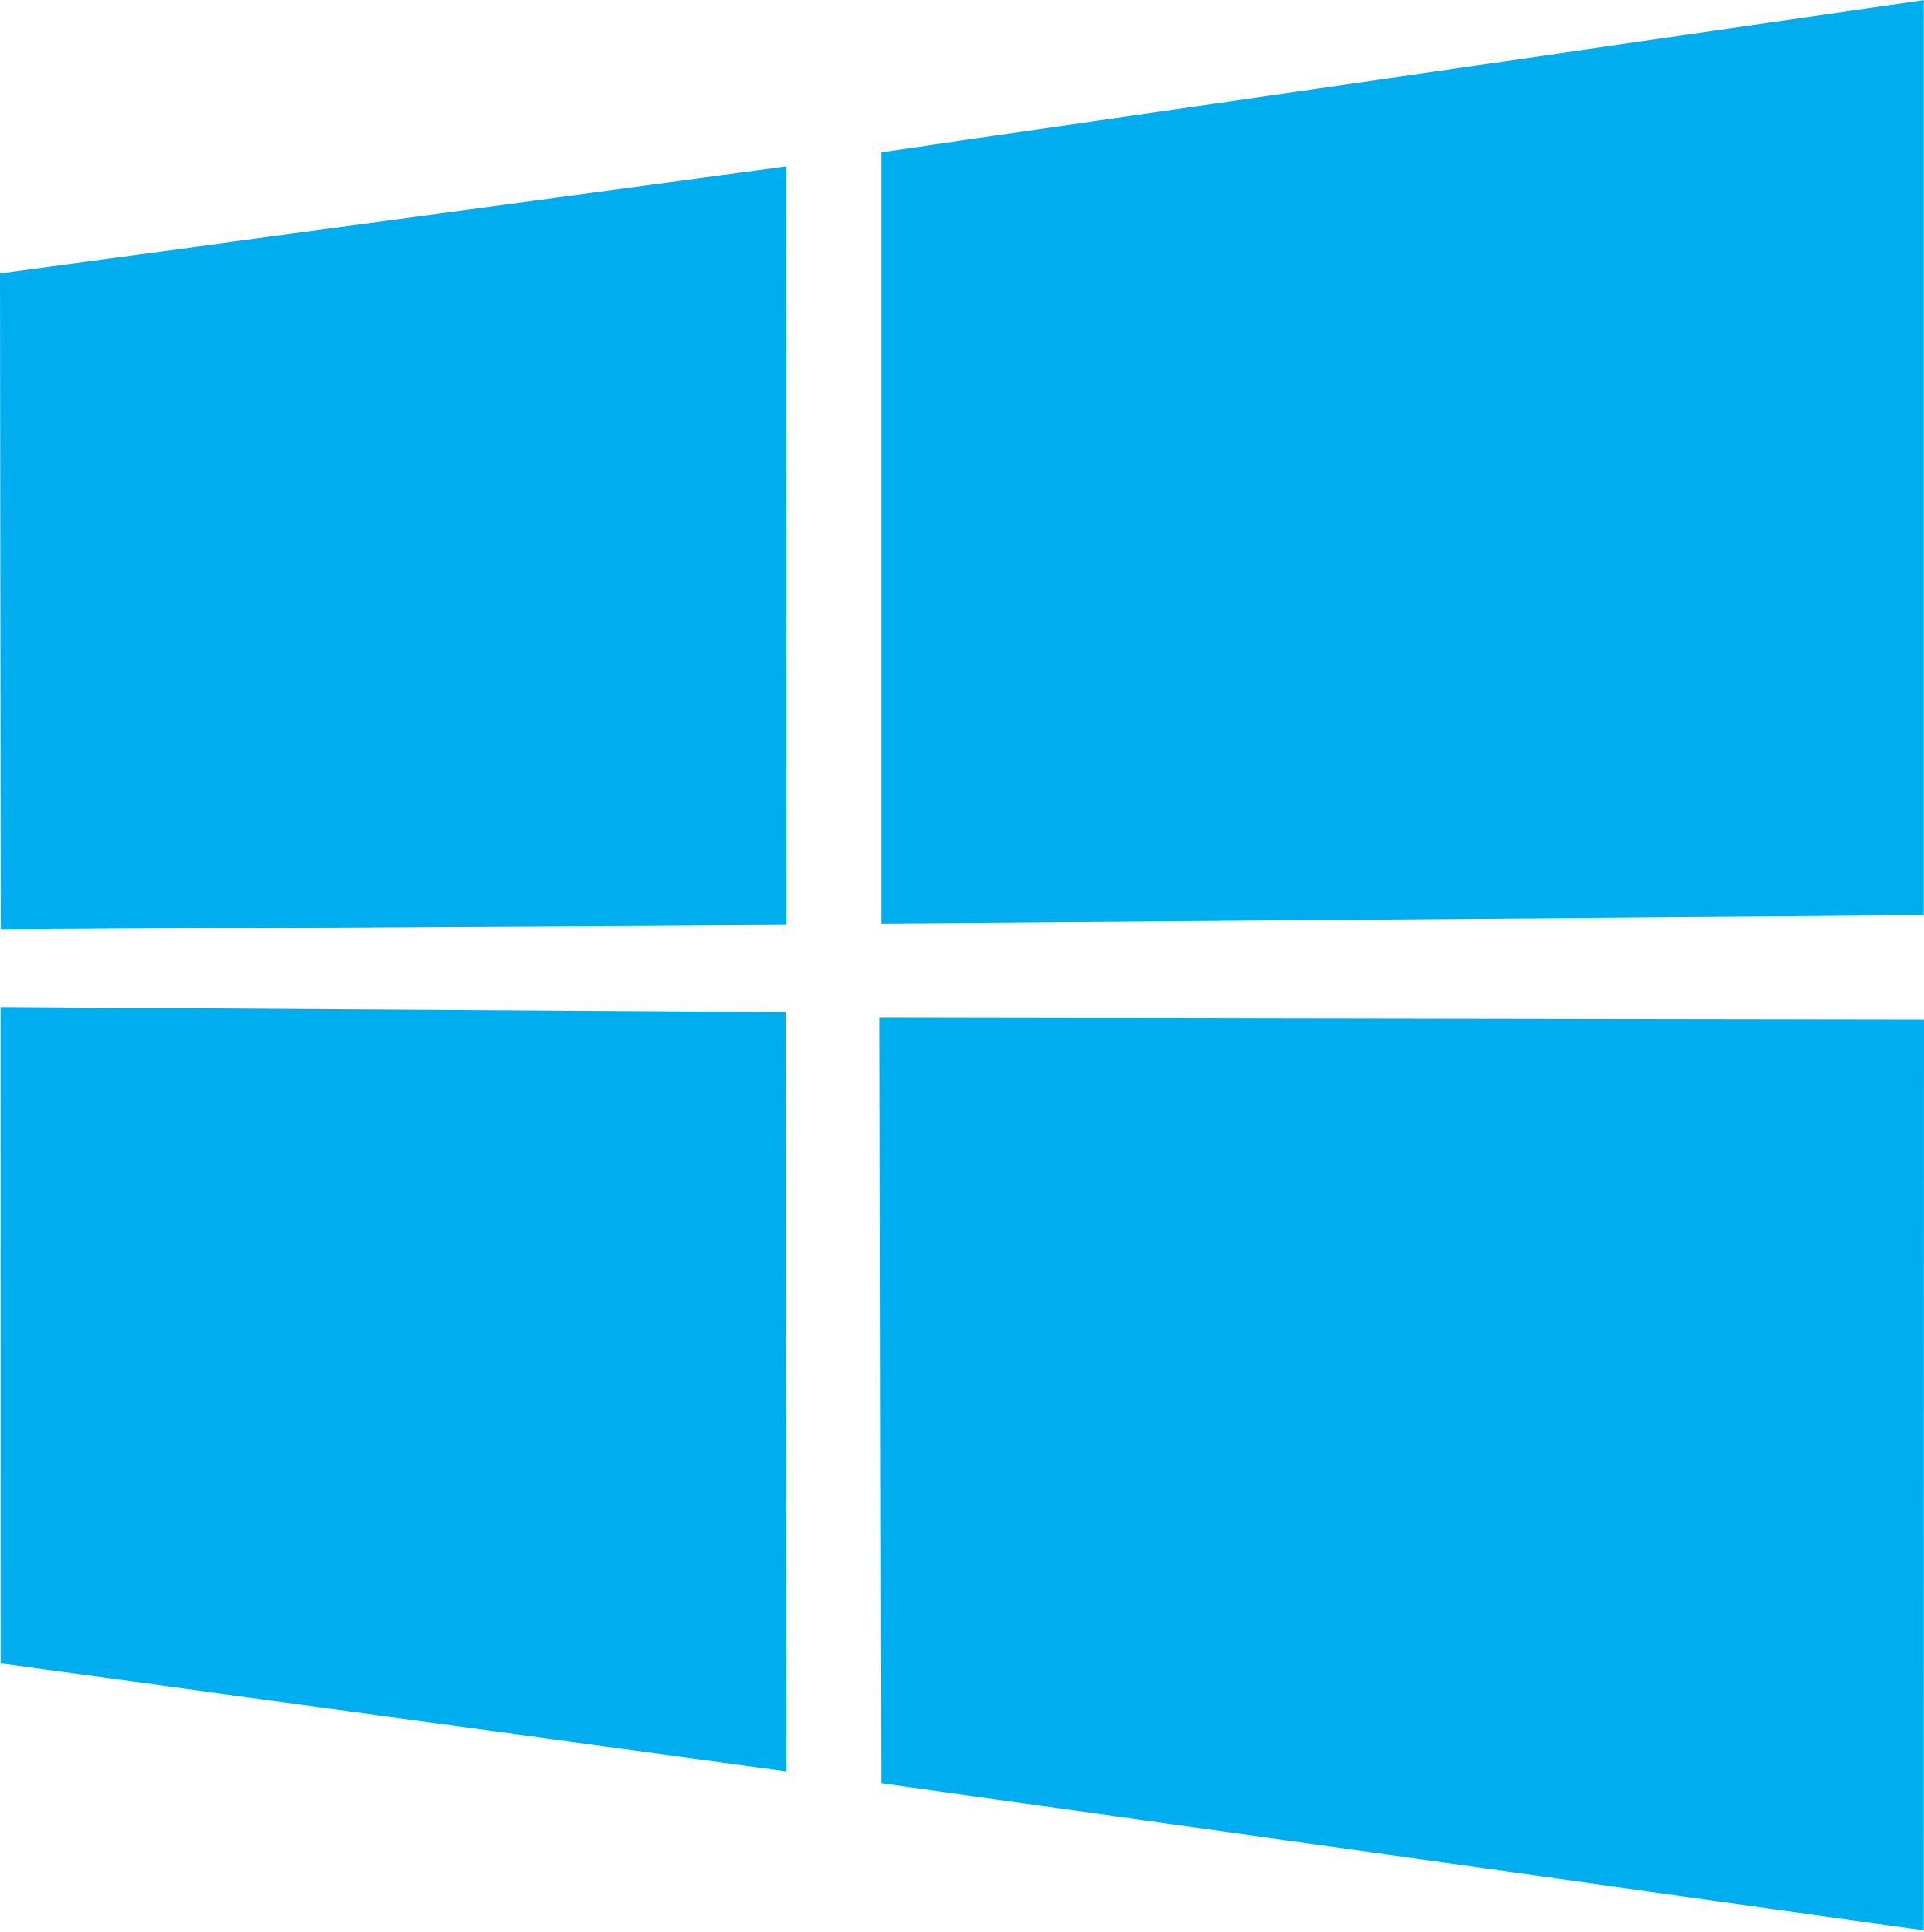 Microsoft Windows Logo - Microsoft Windows Logo PNG Transparent & SVG Vector - Freebie Supply